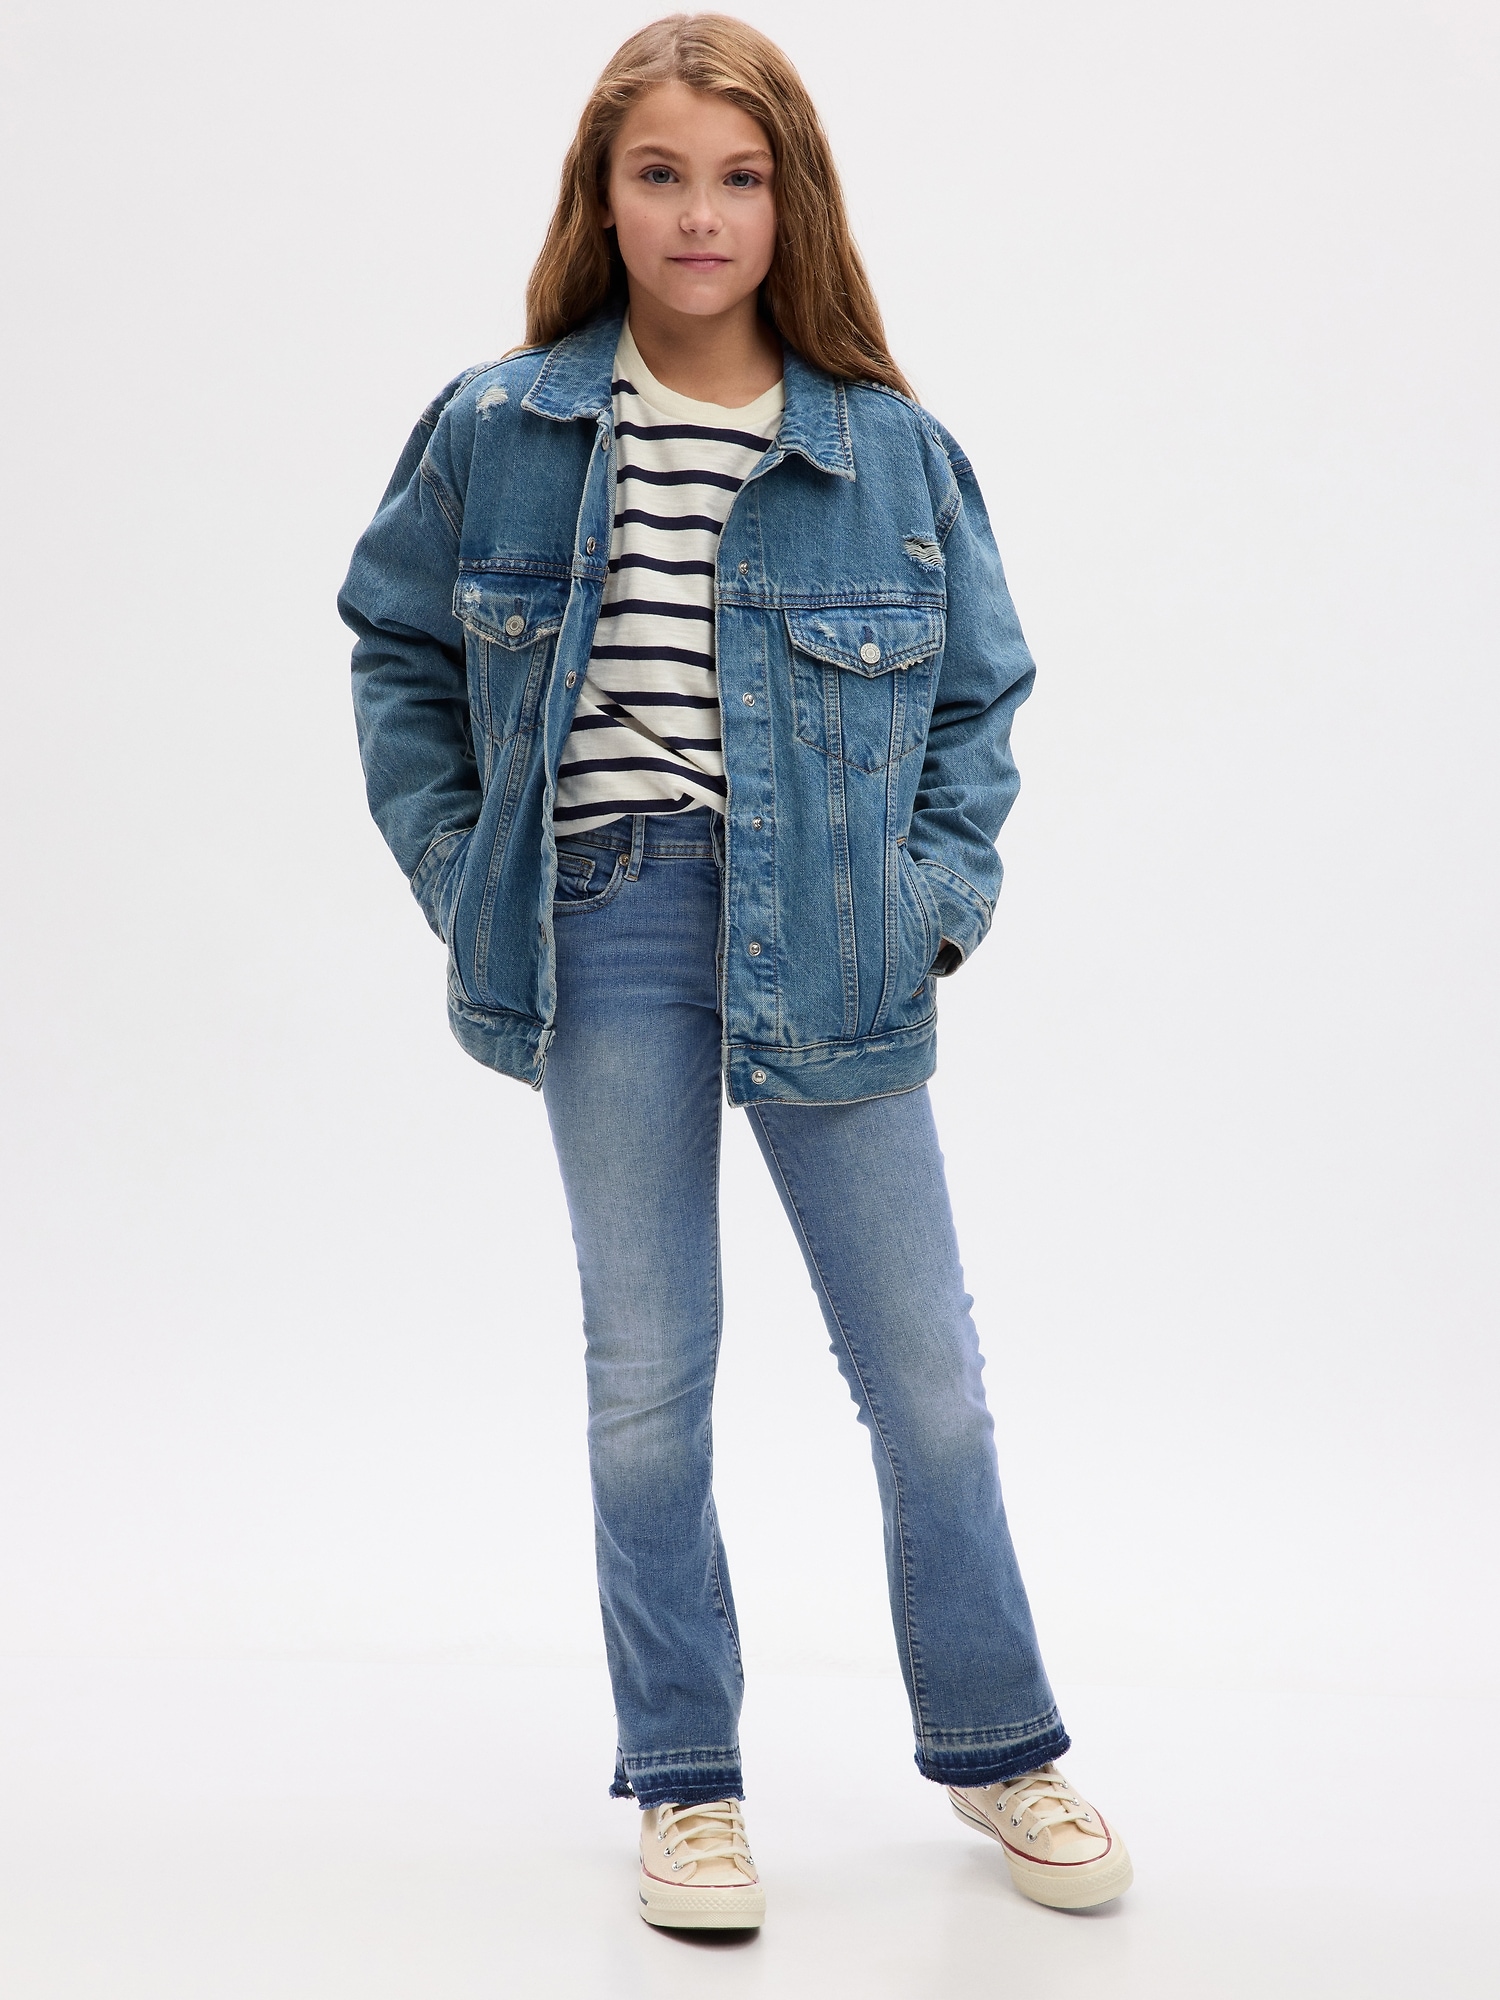 Gap Factory Girls' Mid Rise Straight Rhinestone Jeans with Washwell Dark Wash Size 18